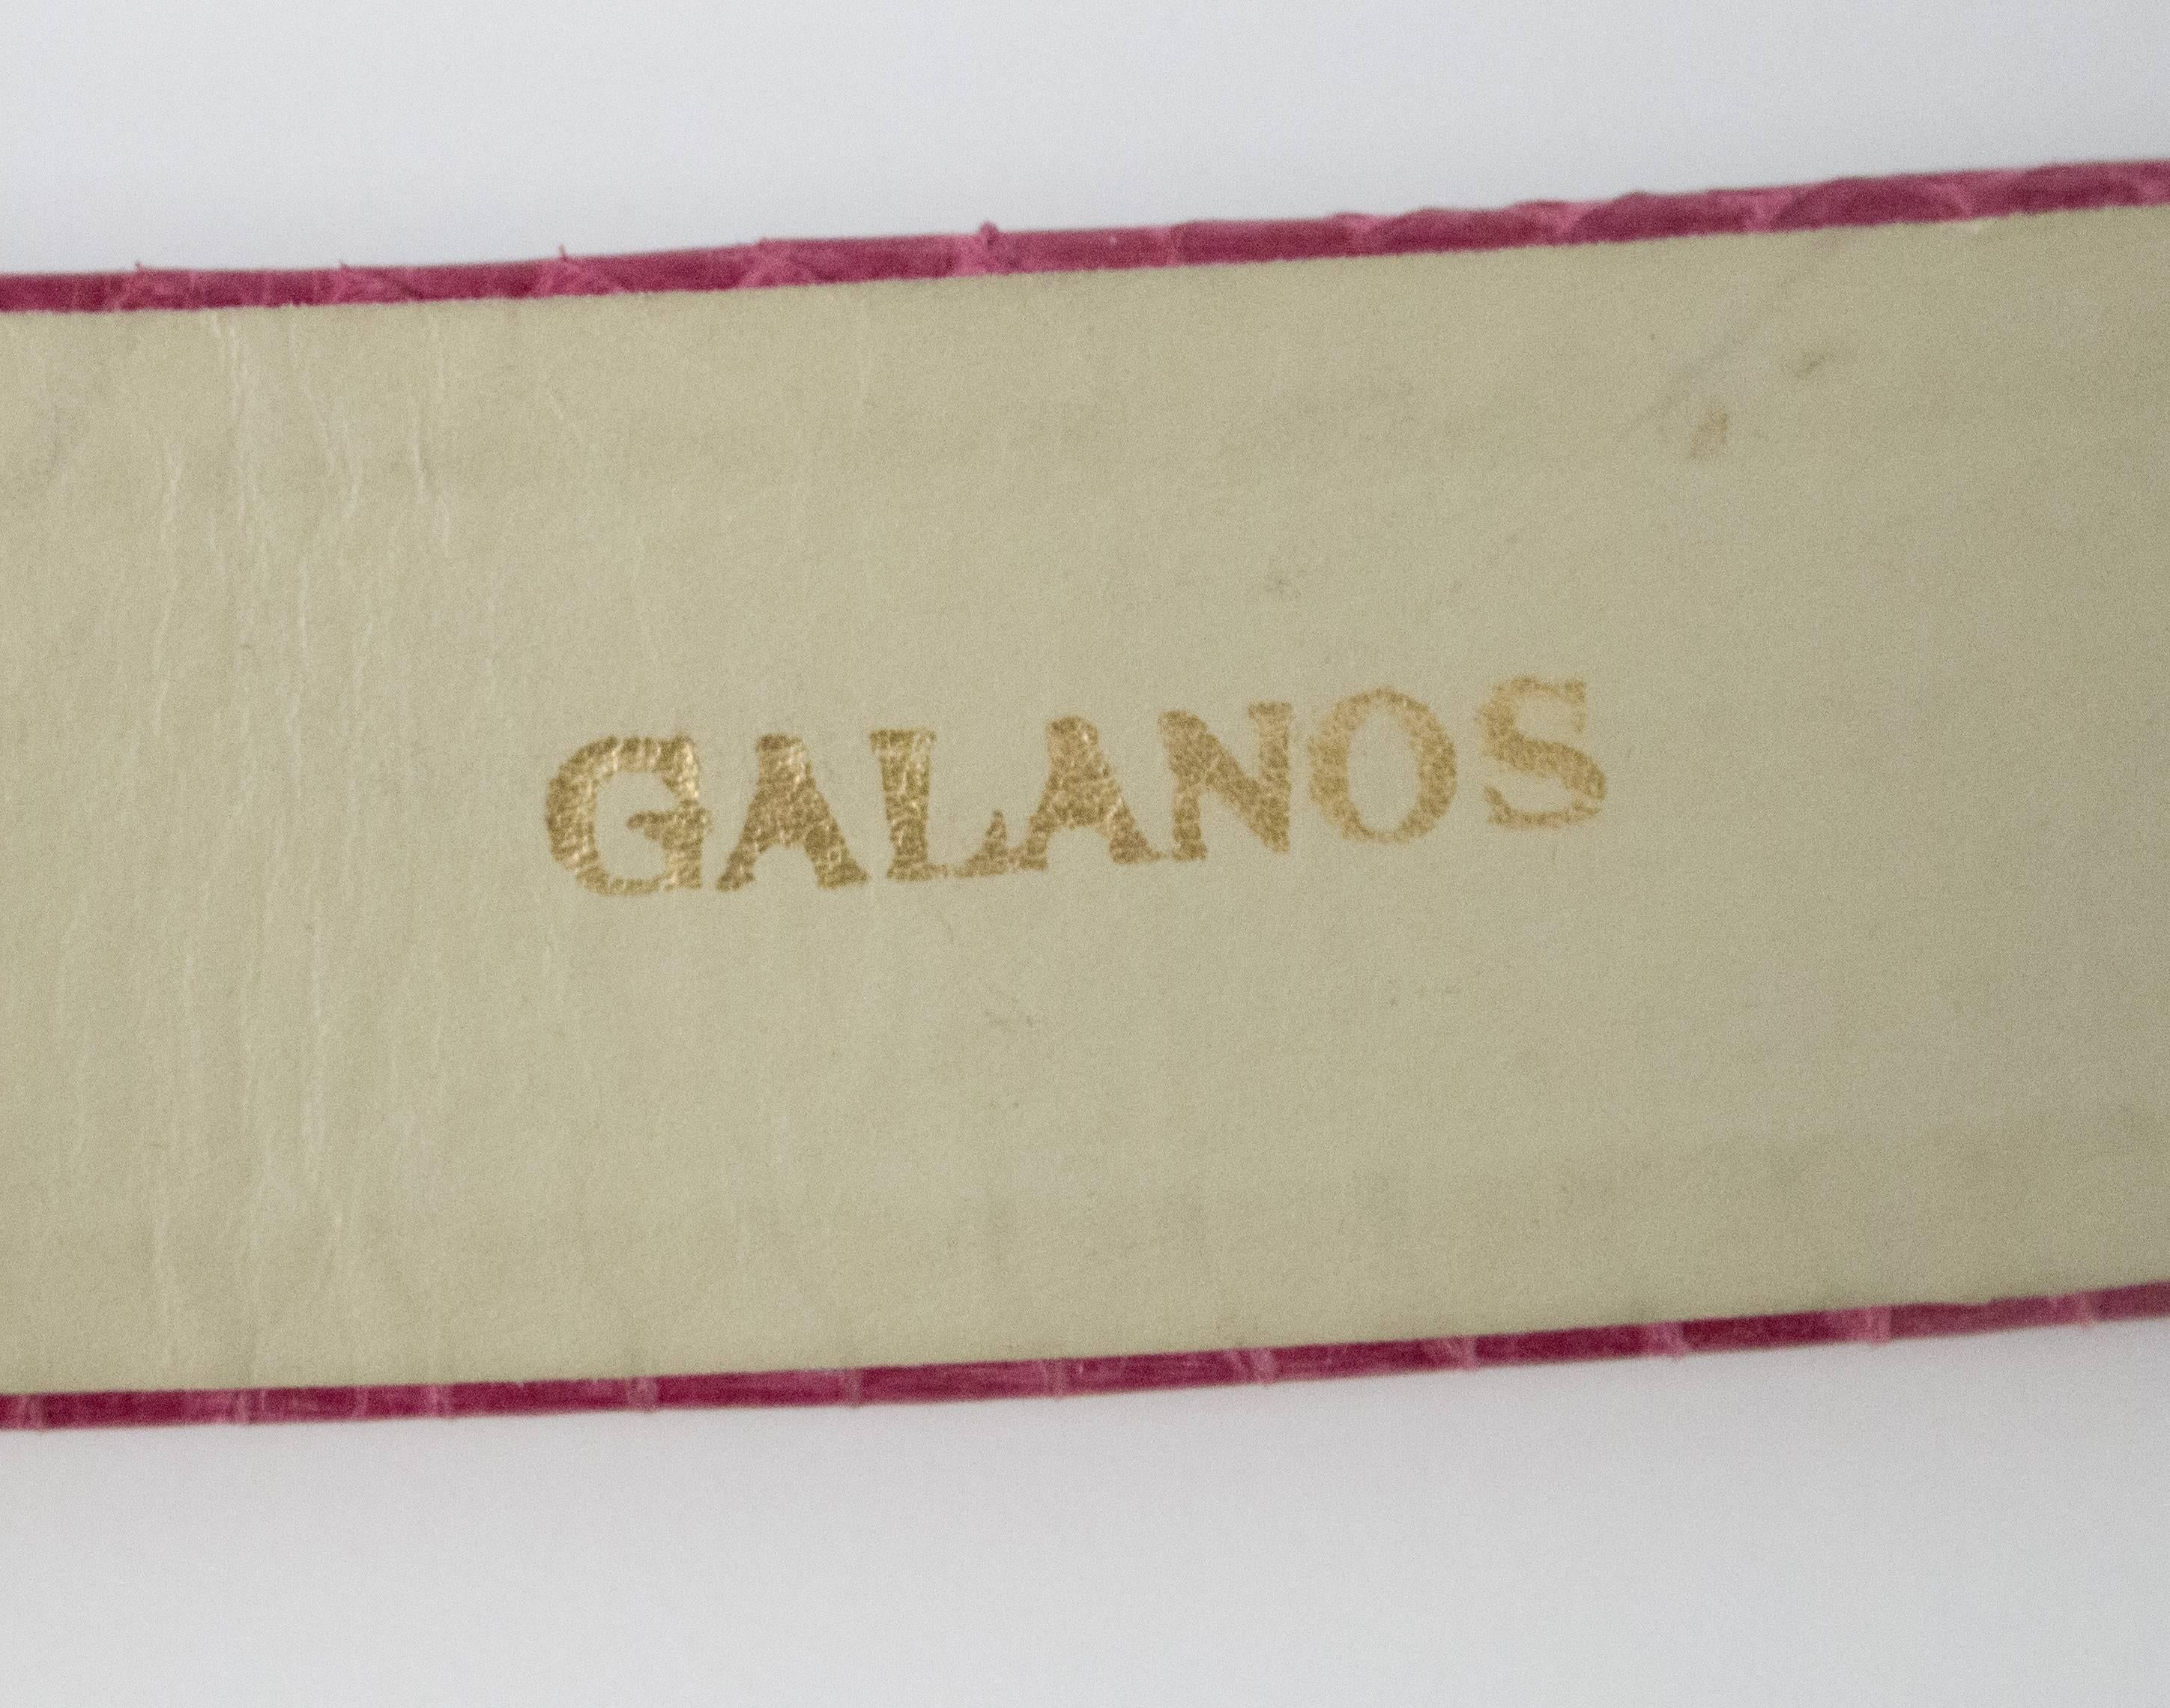 Galanos Magenta Snakeskin Belt. Pronged belt buckle fastening. Adjustable, maximum 29